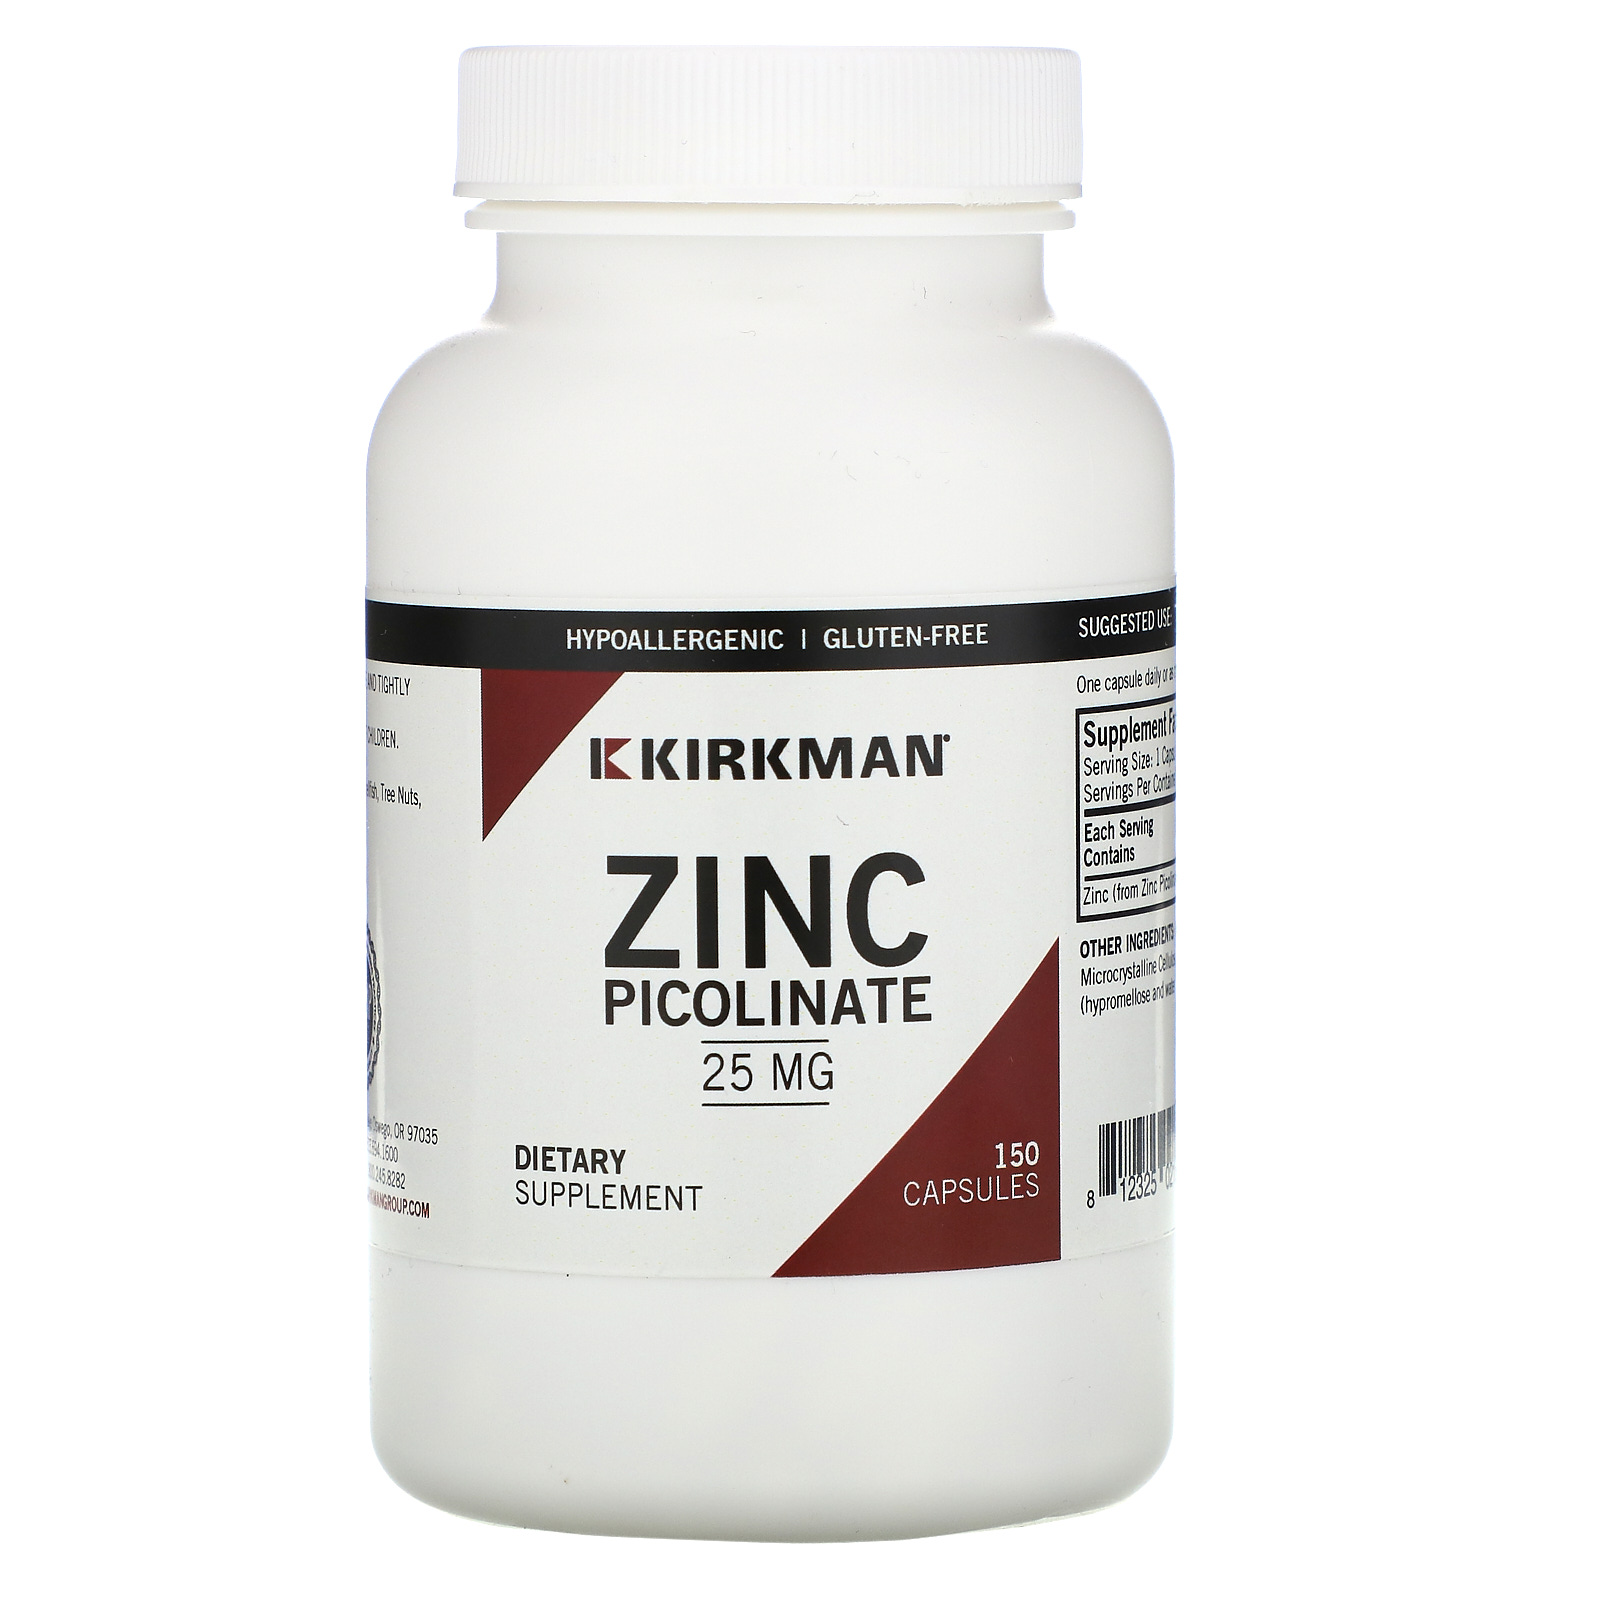 Zinc 25. Цинк 25 мг. Zinc Picolinate 25 MG. Киркман цинк пиколинат. SNT Zinc Picolinate 150 капсул.